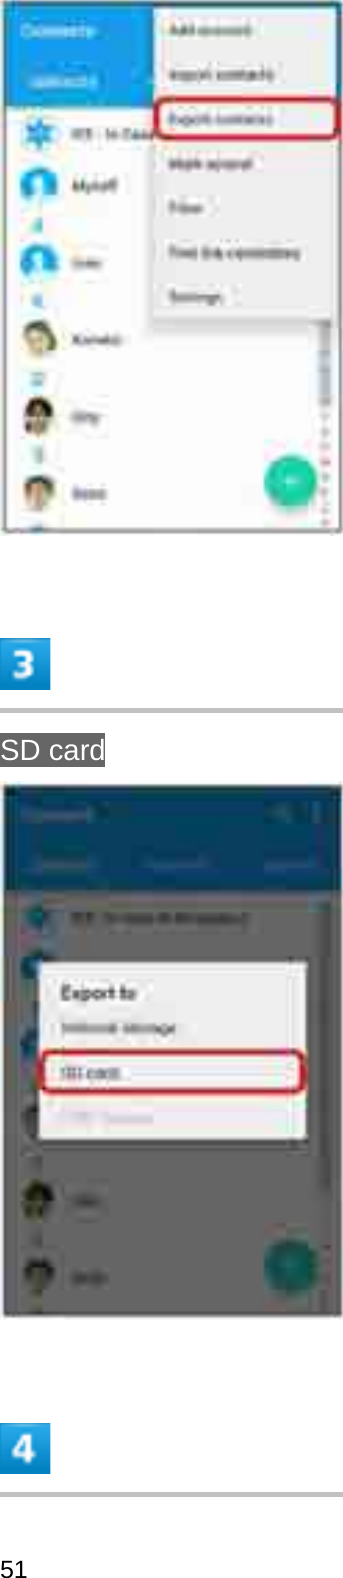 SD card51